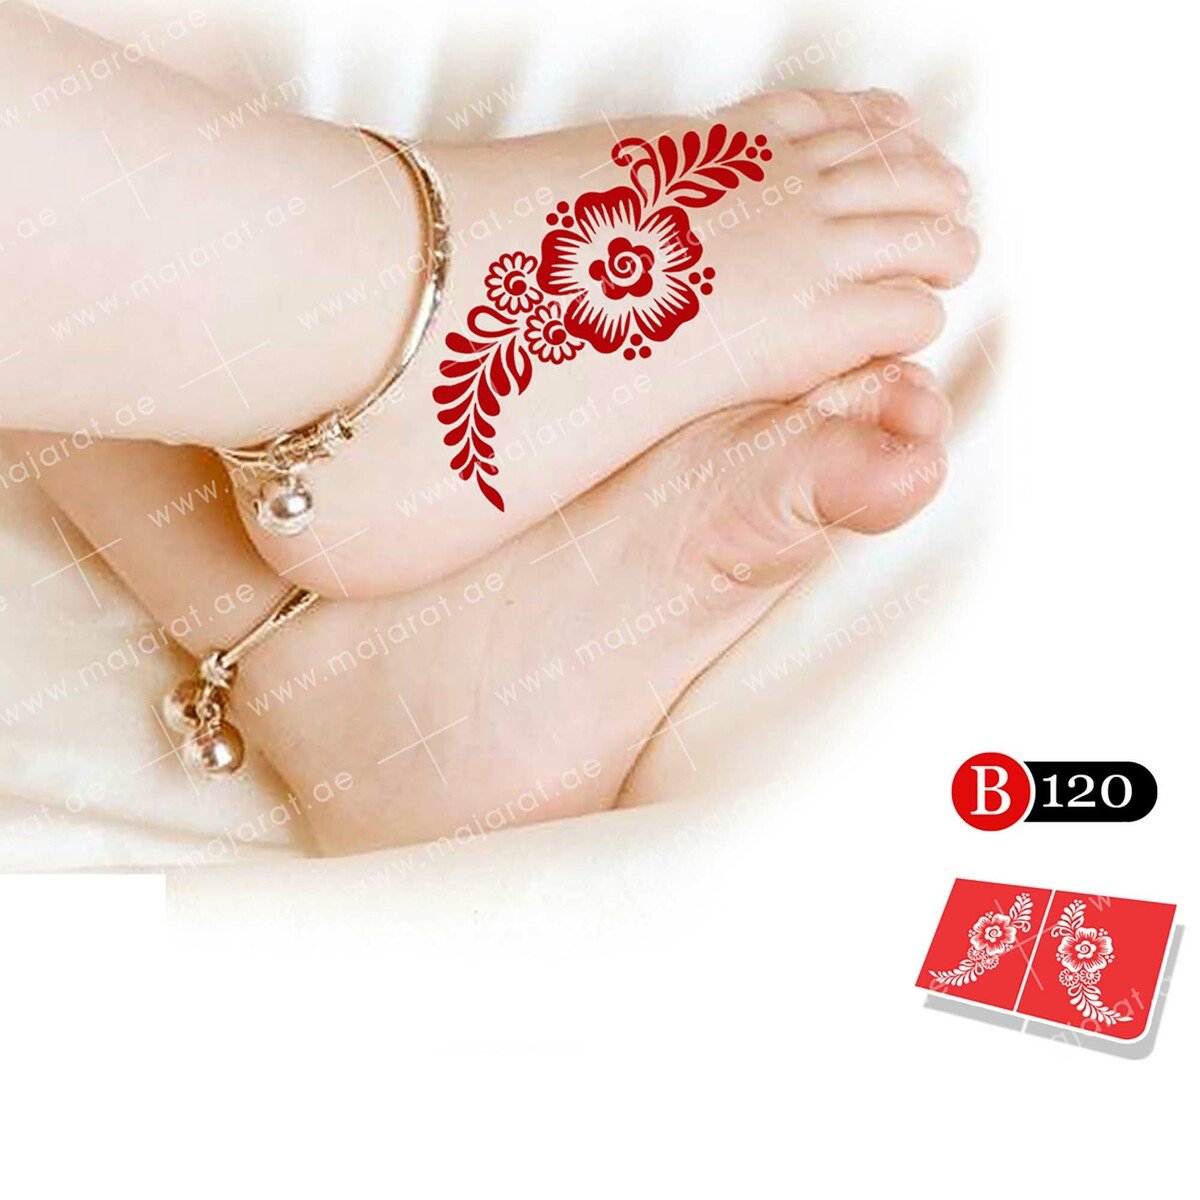 Majarat Henna Design Sticker Baby B120 15x10cm